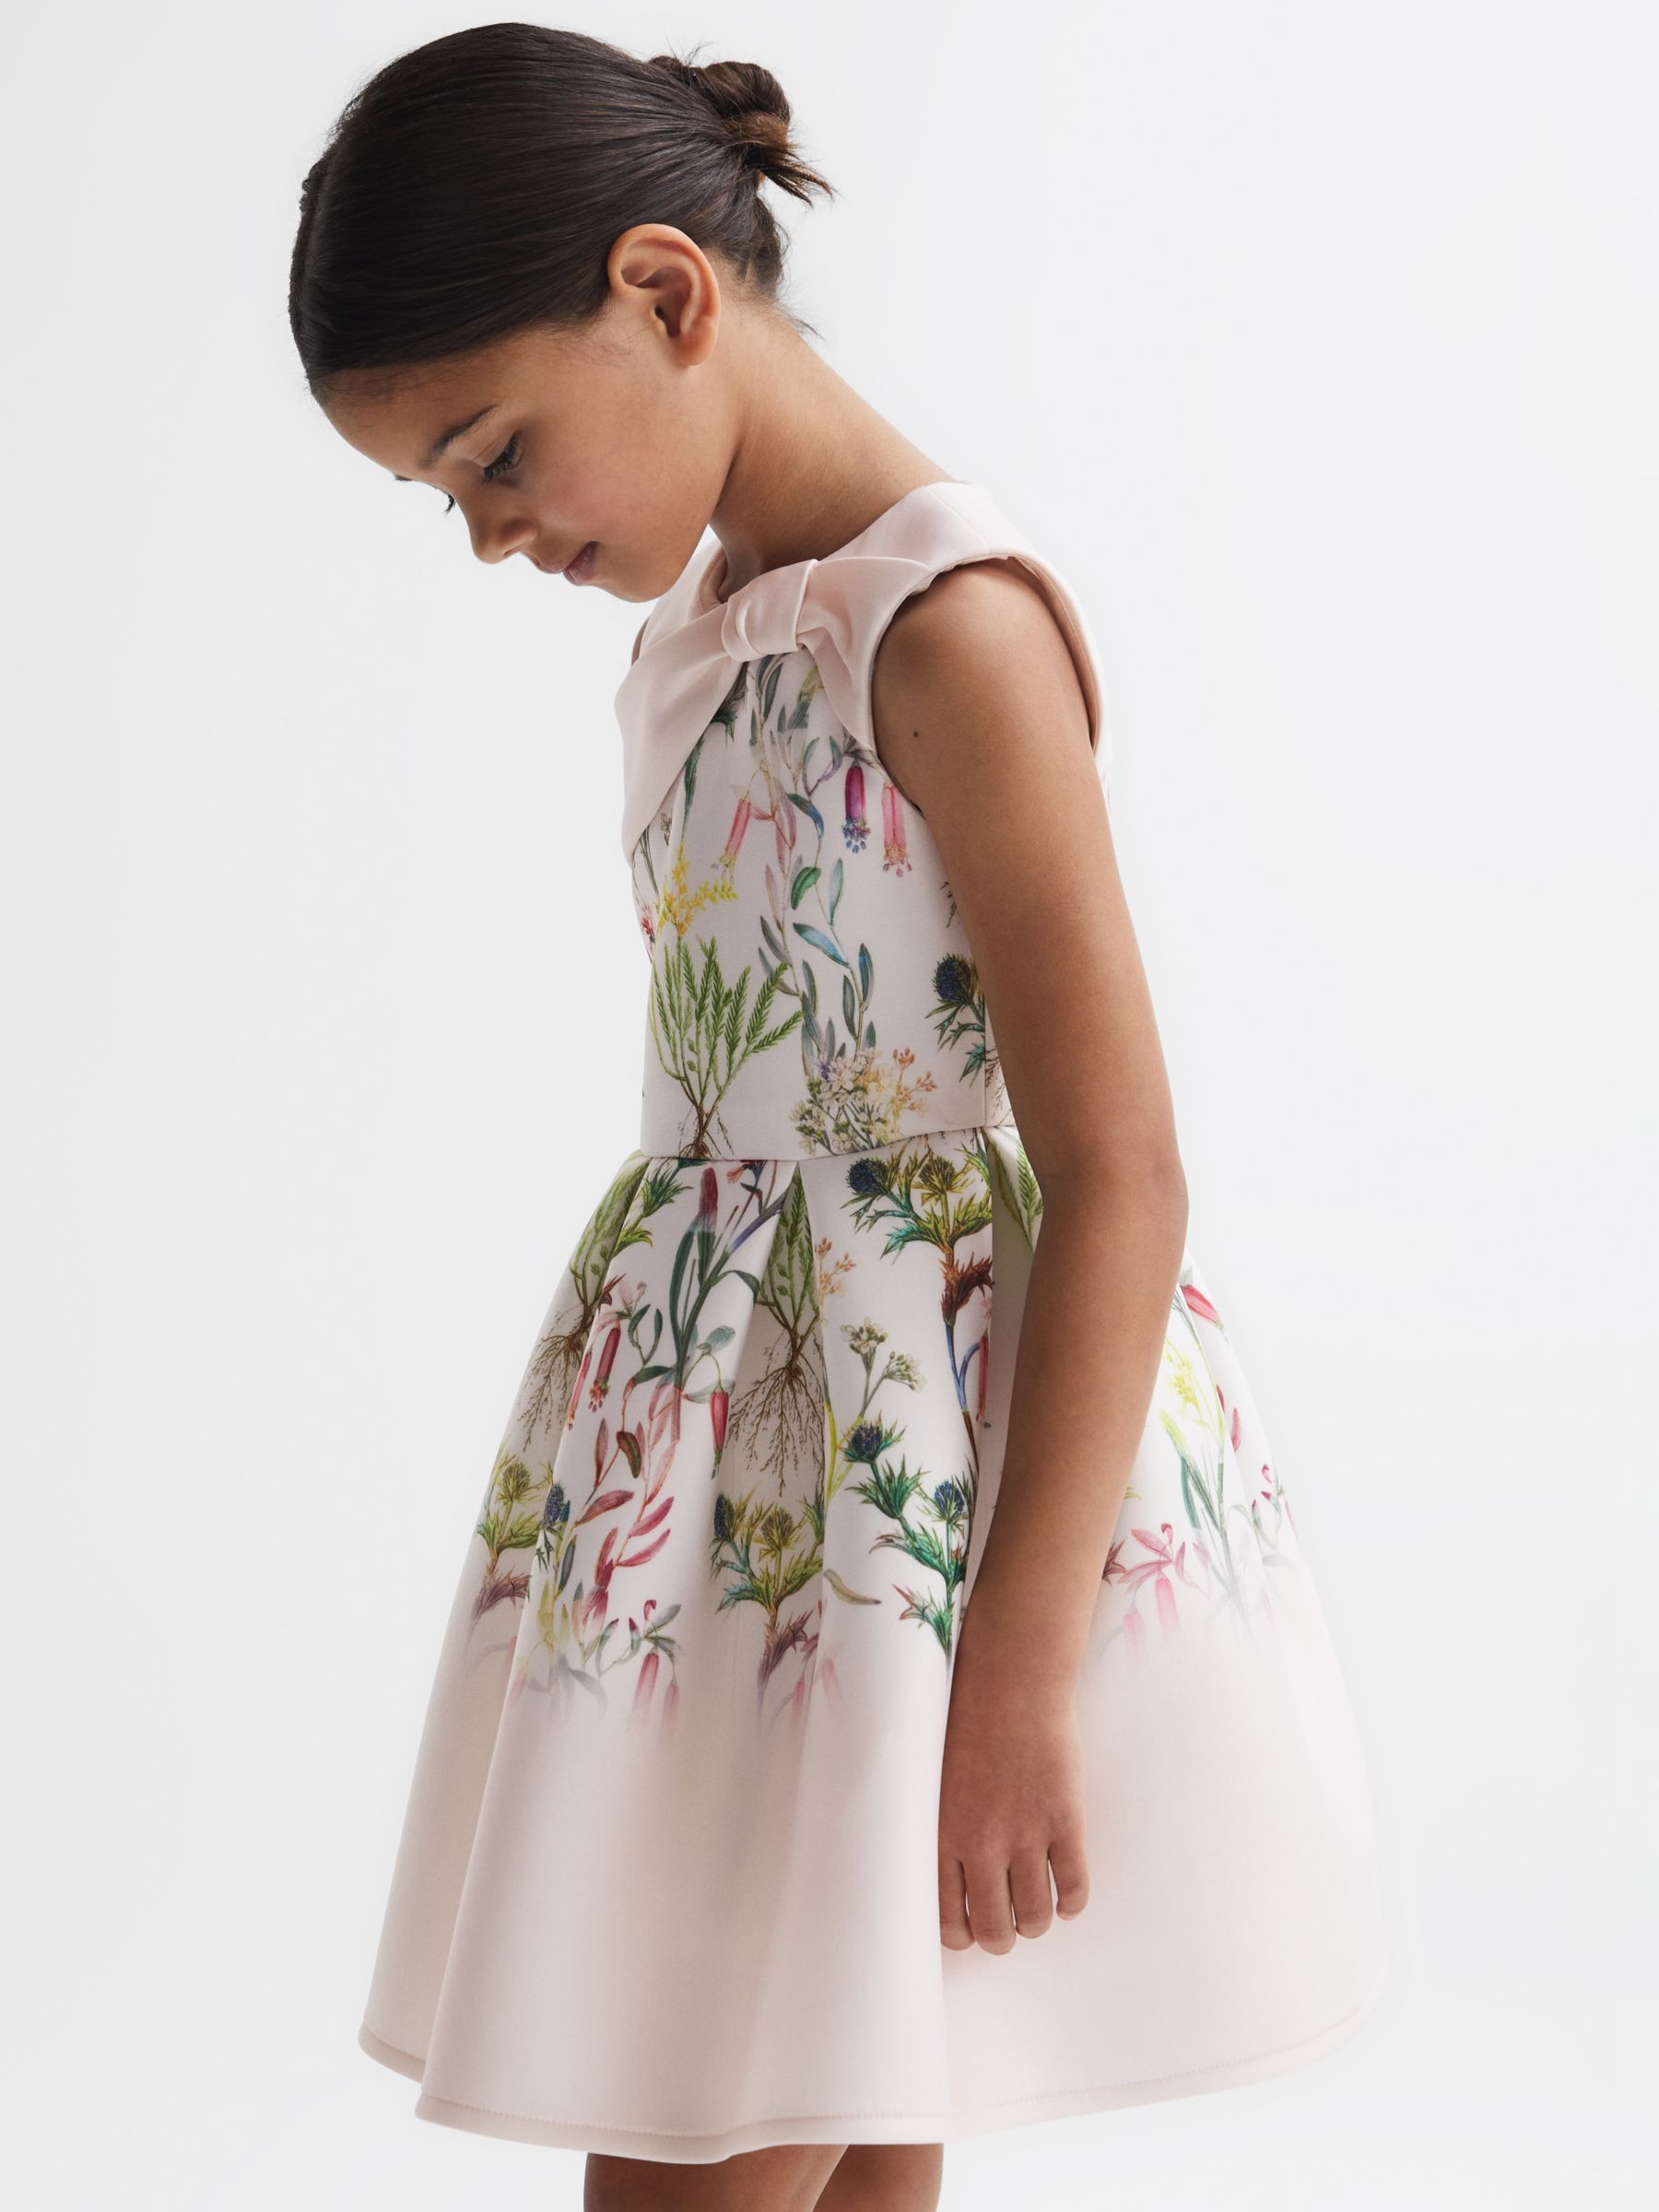 Reiss Kids' Emily Bow Detail Floral Print Scuba Dress, Green/Multi, 4-5 years